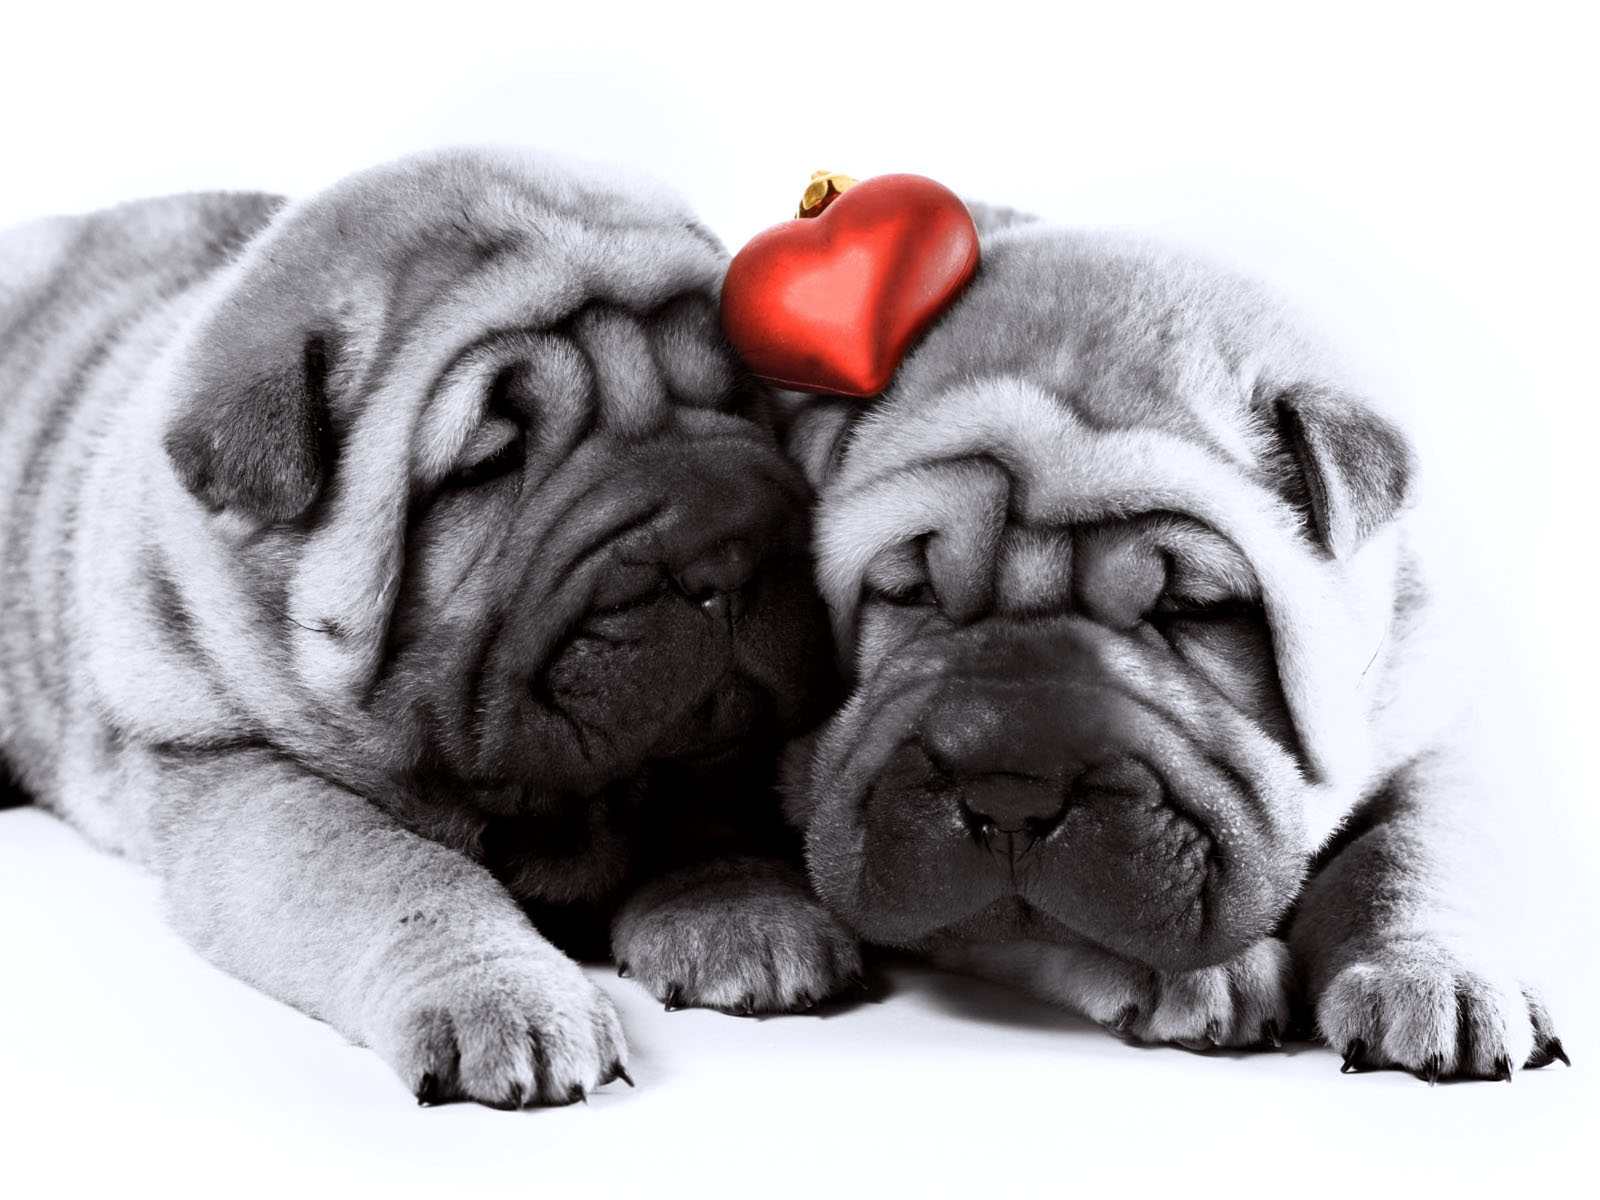 Gray Dog Love couple Image Wallpaper